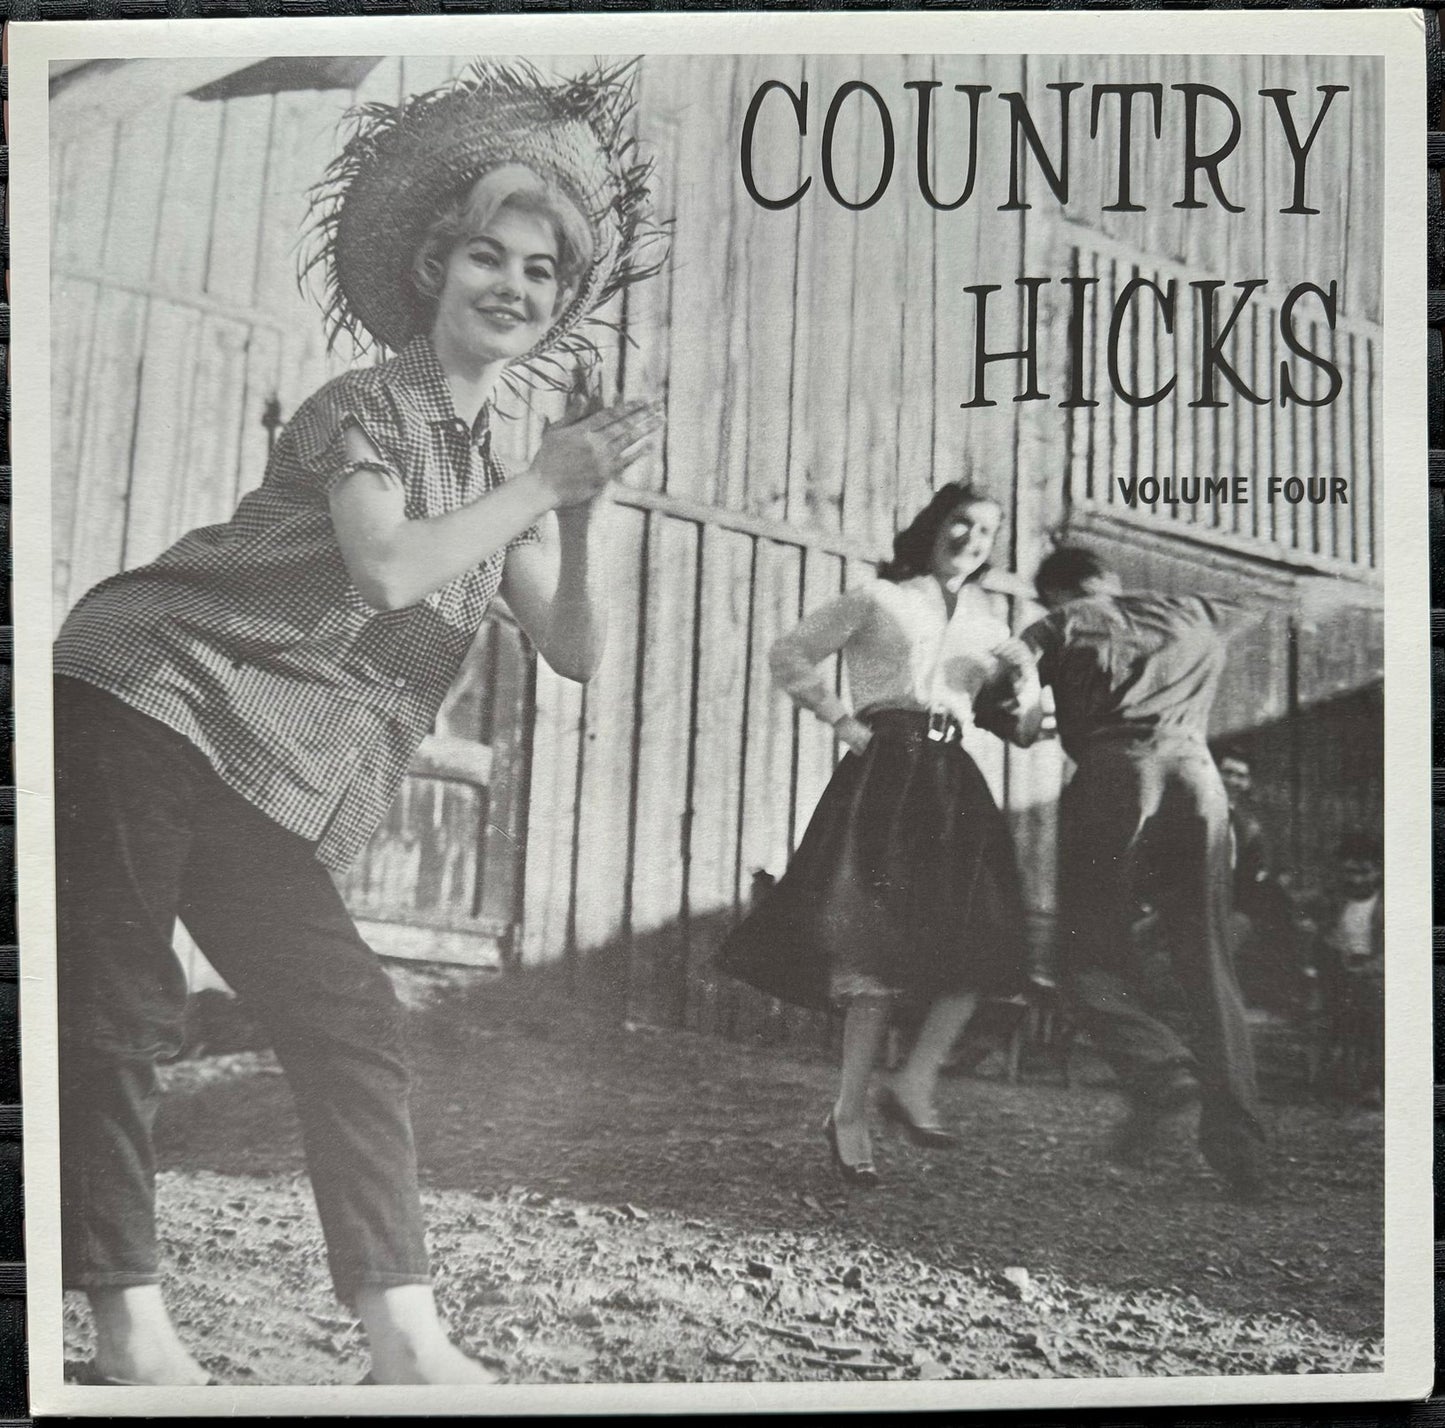 LP - VA – Country Hicks Vol. 1-7 (vollständige Serie)